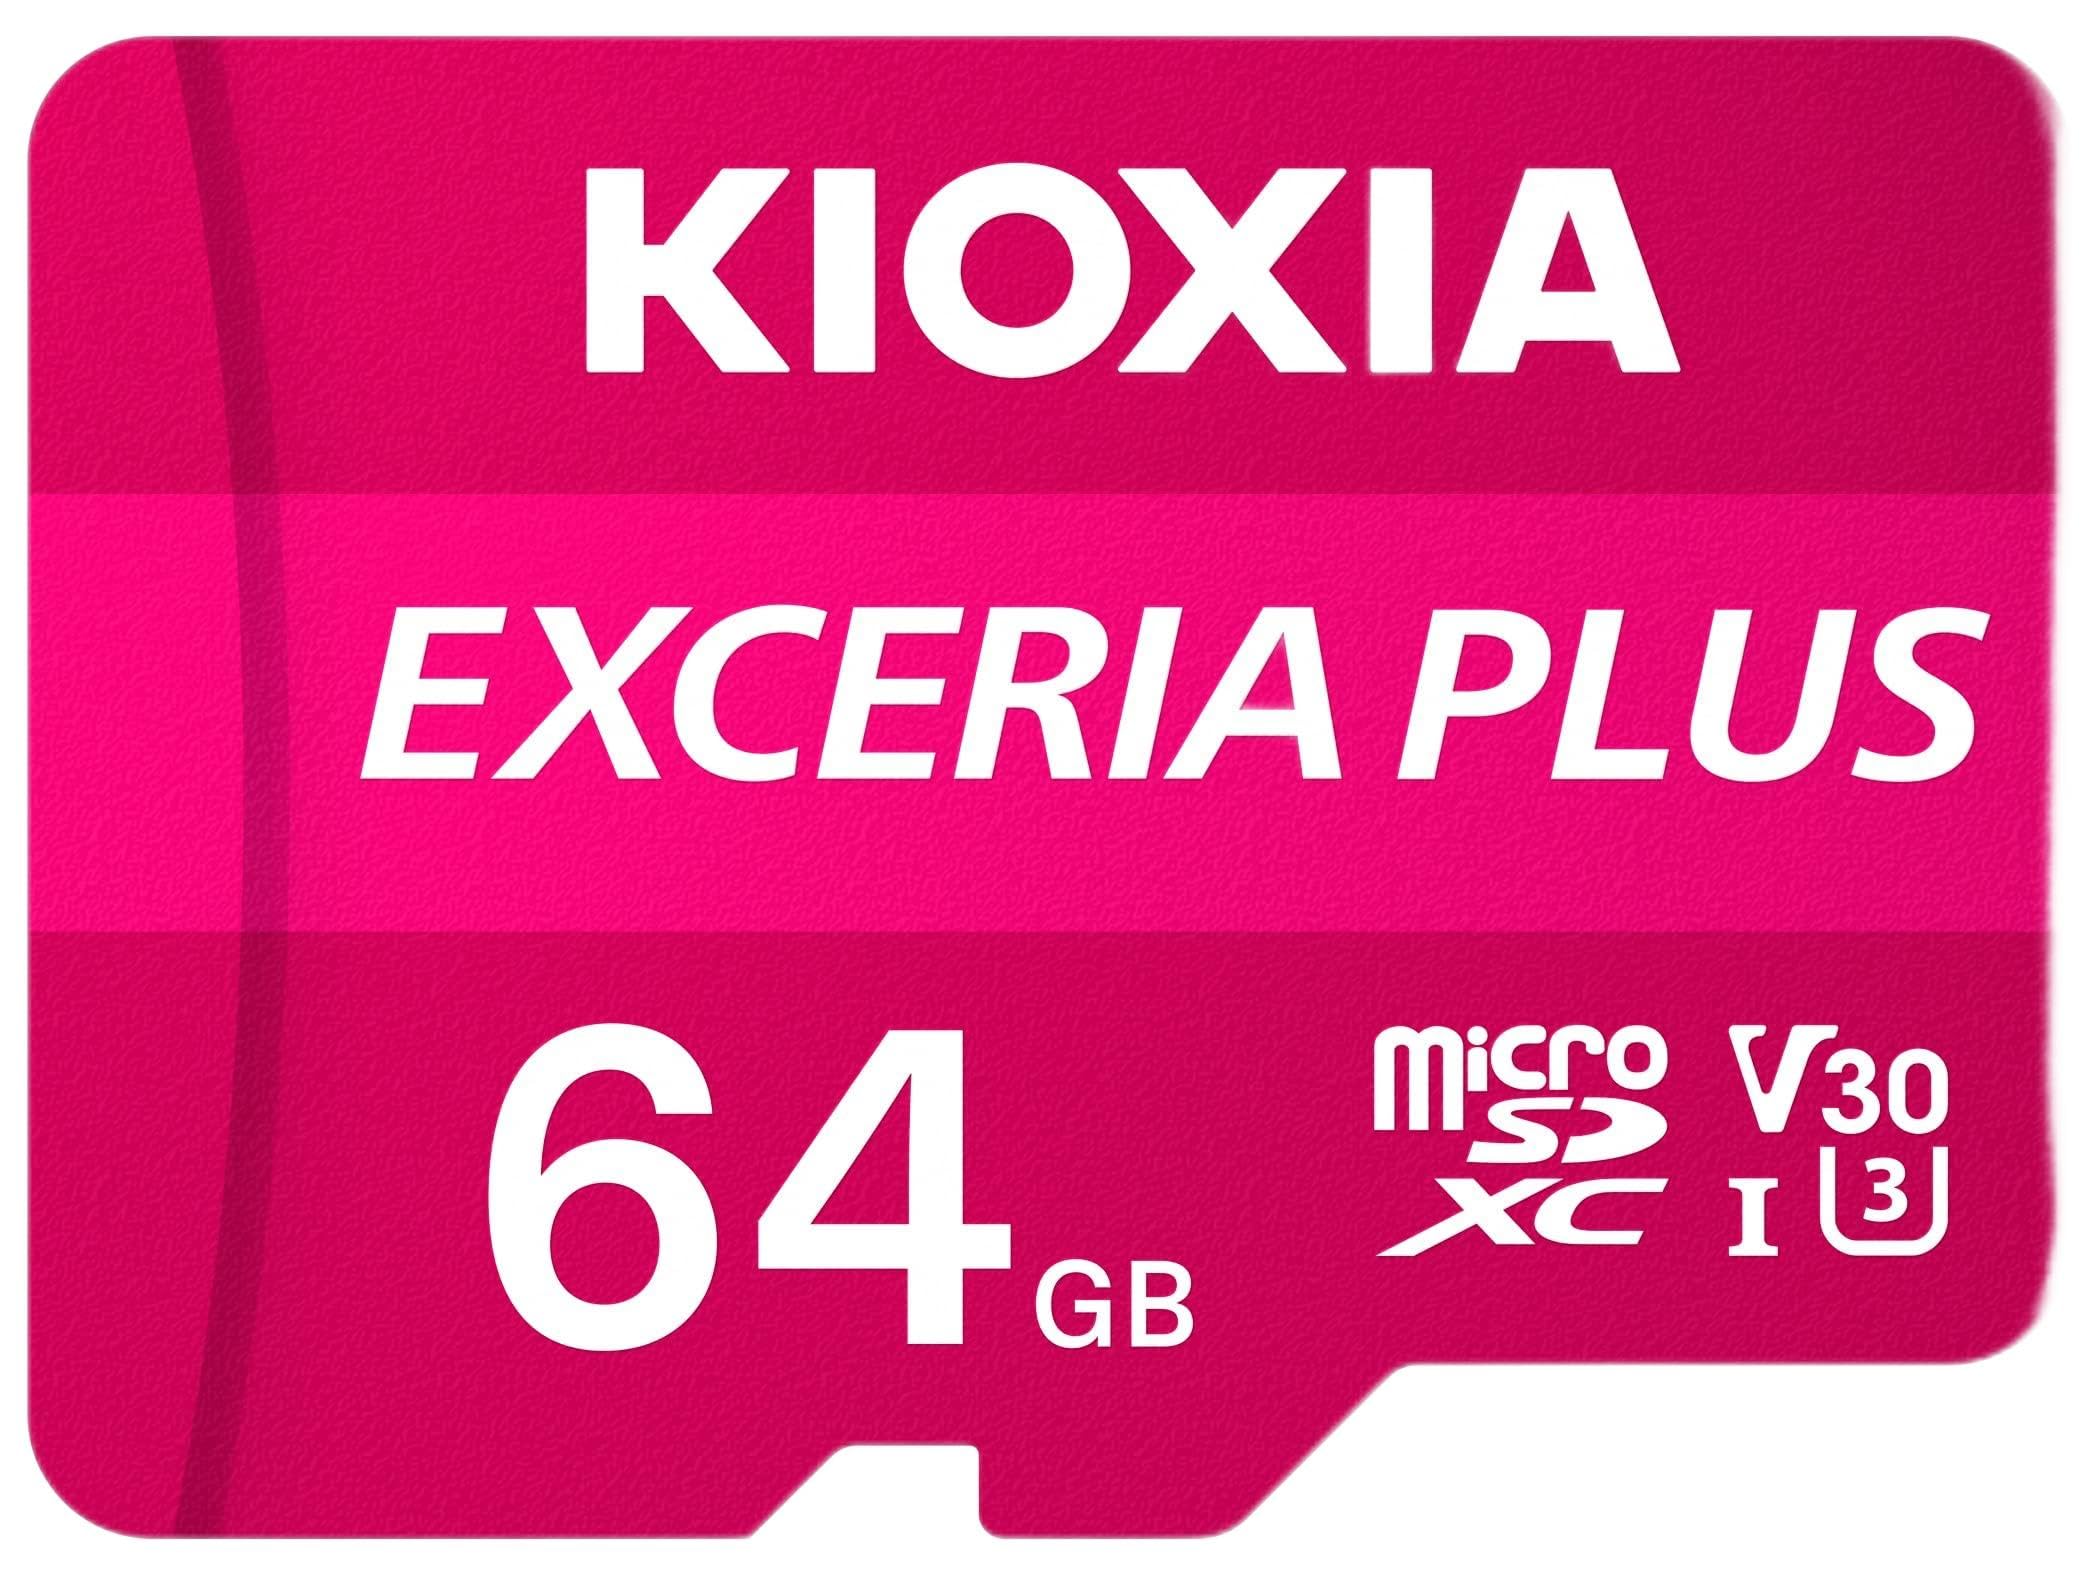 KIOXIA(キオクシア) 旧東芝メモリ microSDXCカード 64GB UHS-I U3 V30 Class10 (最大読出速度100MB/s) ..